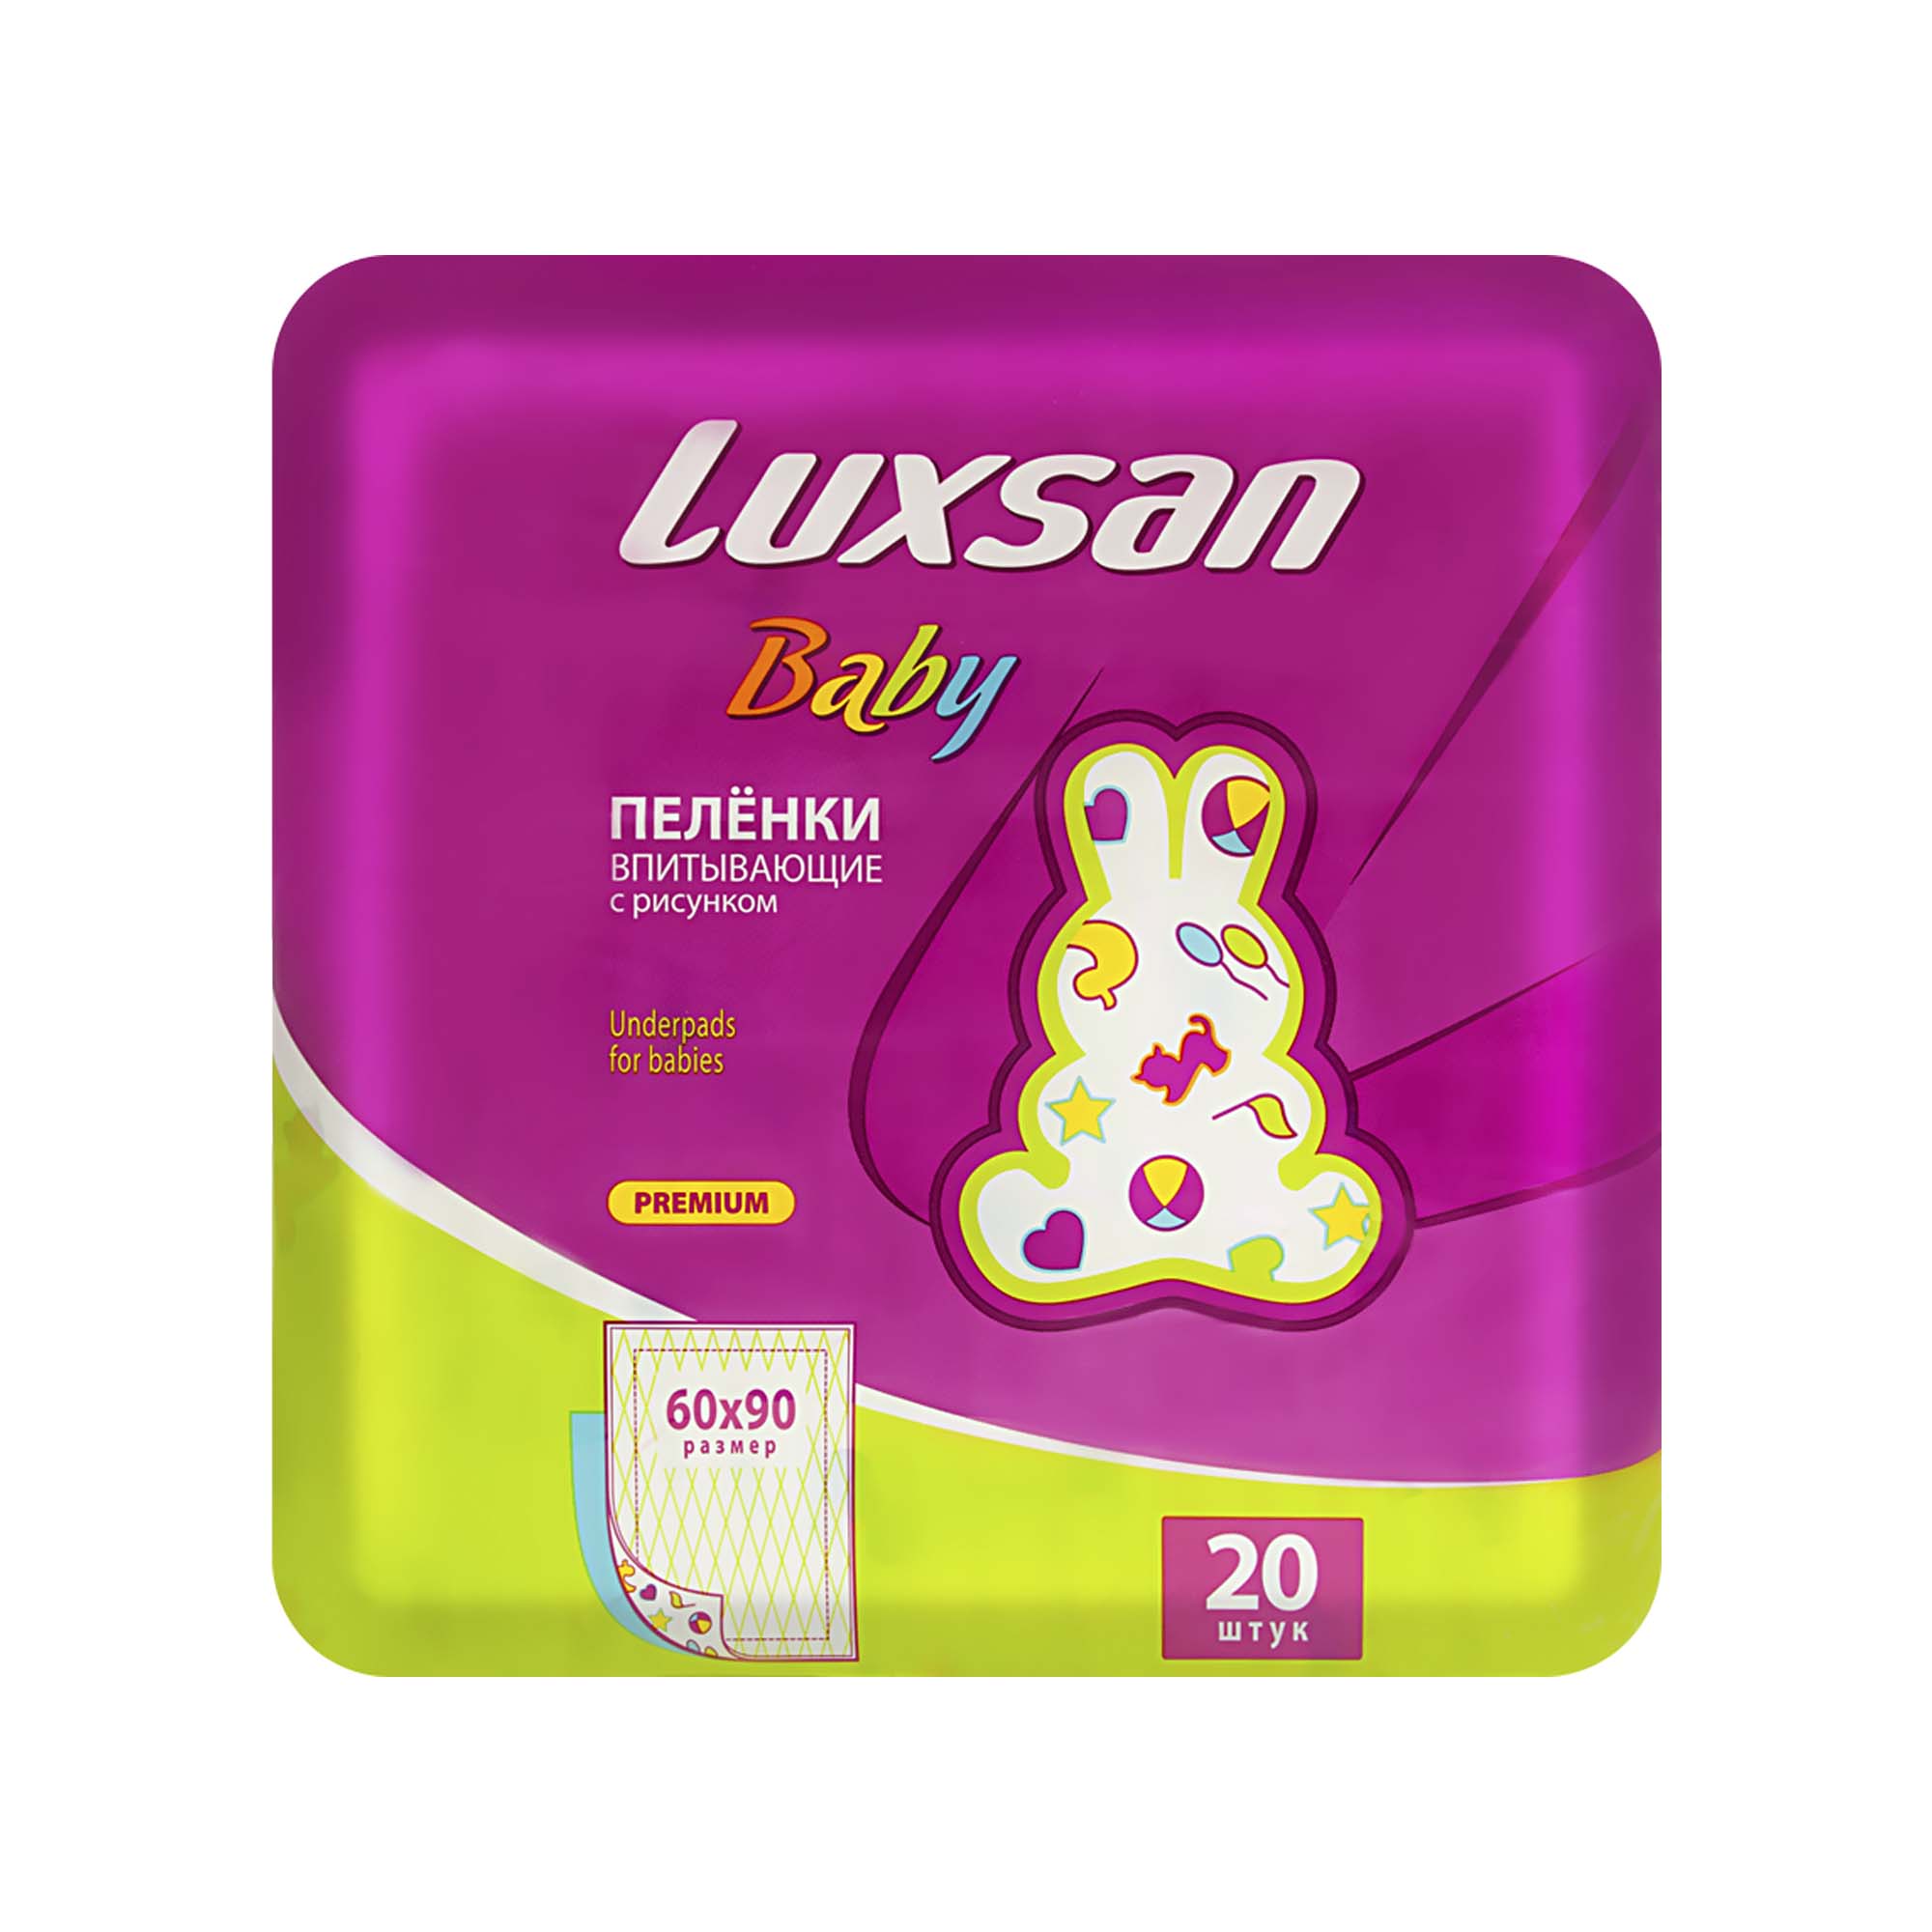 Пеленки впитывающие Luxsan Baby с рисунком 60х90 20 шт - фото 1